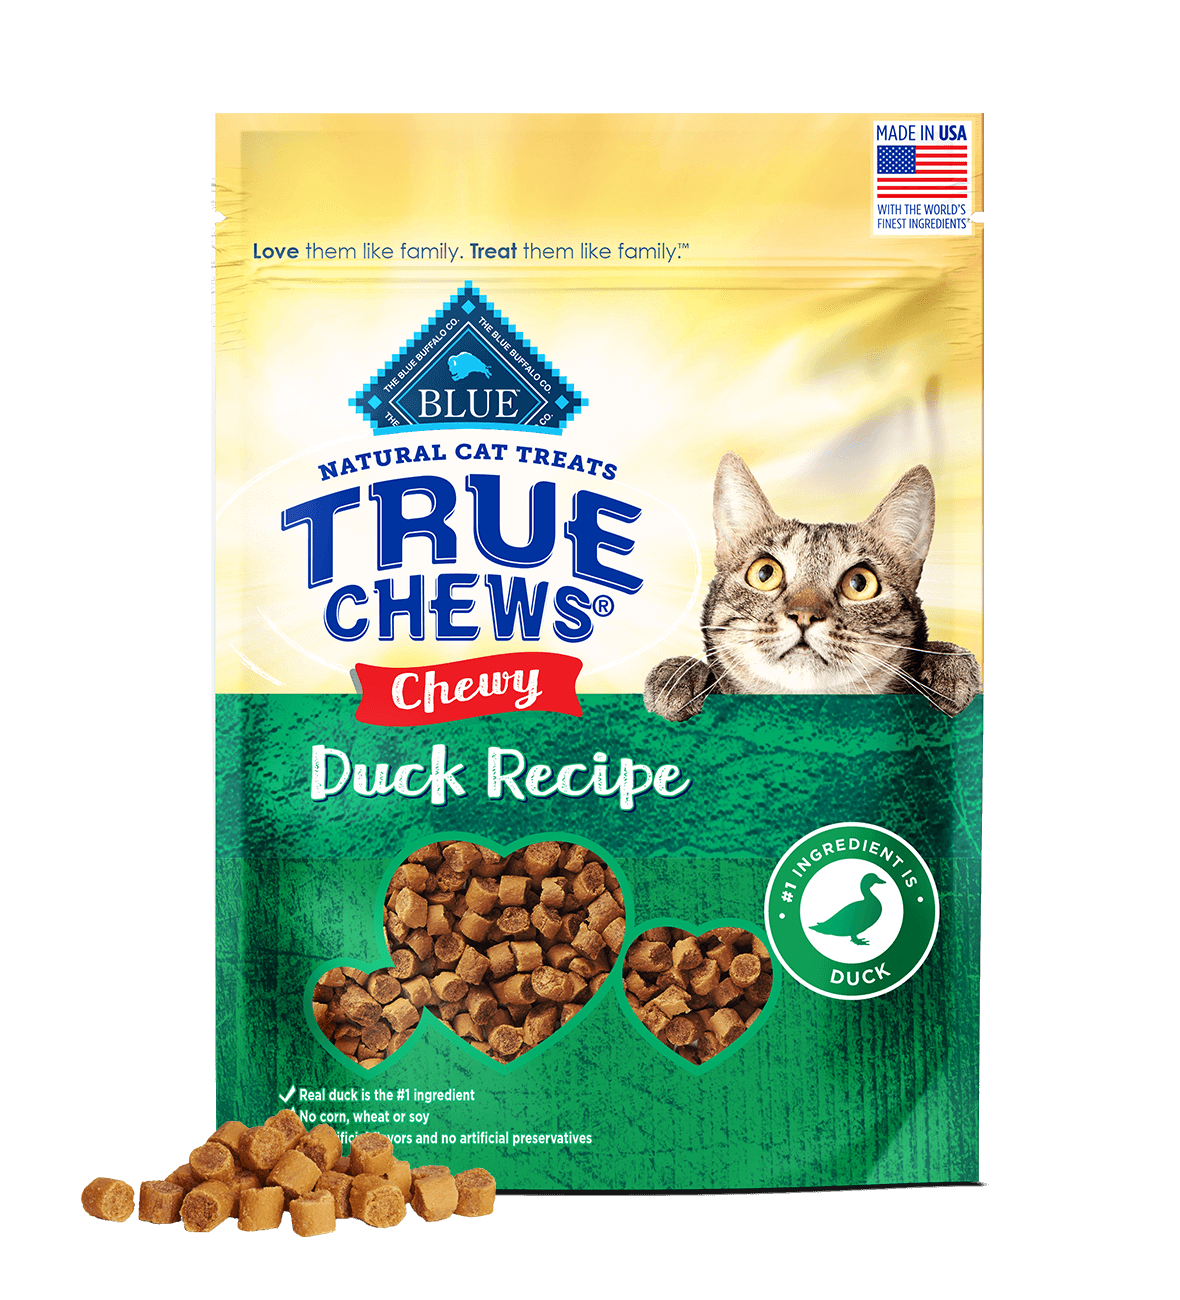 blue true chews ® delicious duck recipe chewy cat treats cat treats